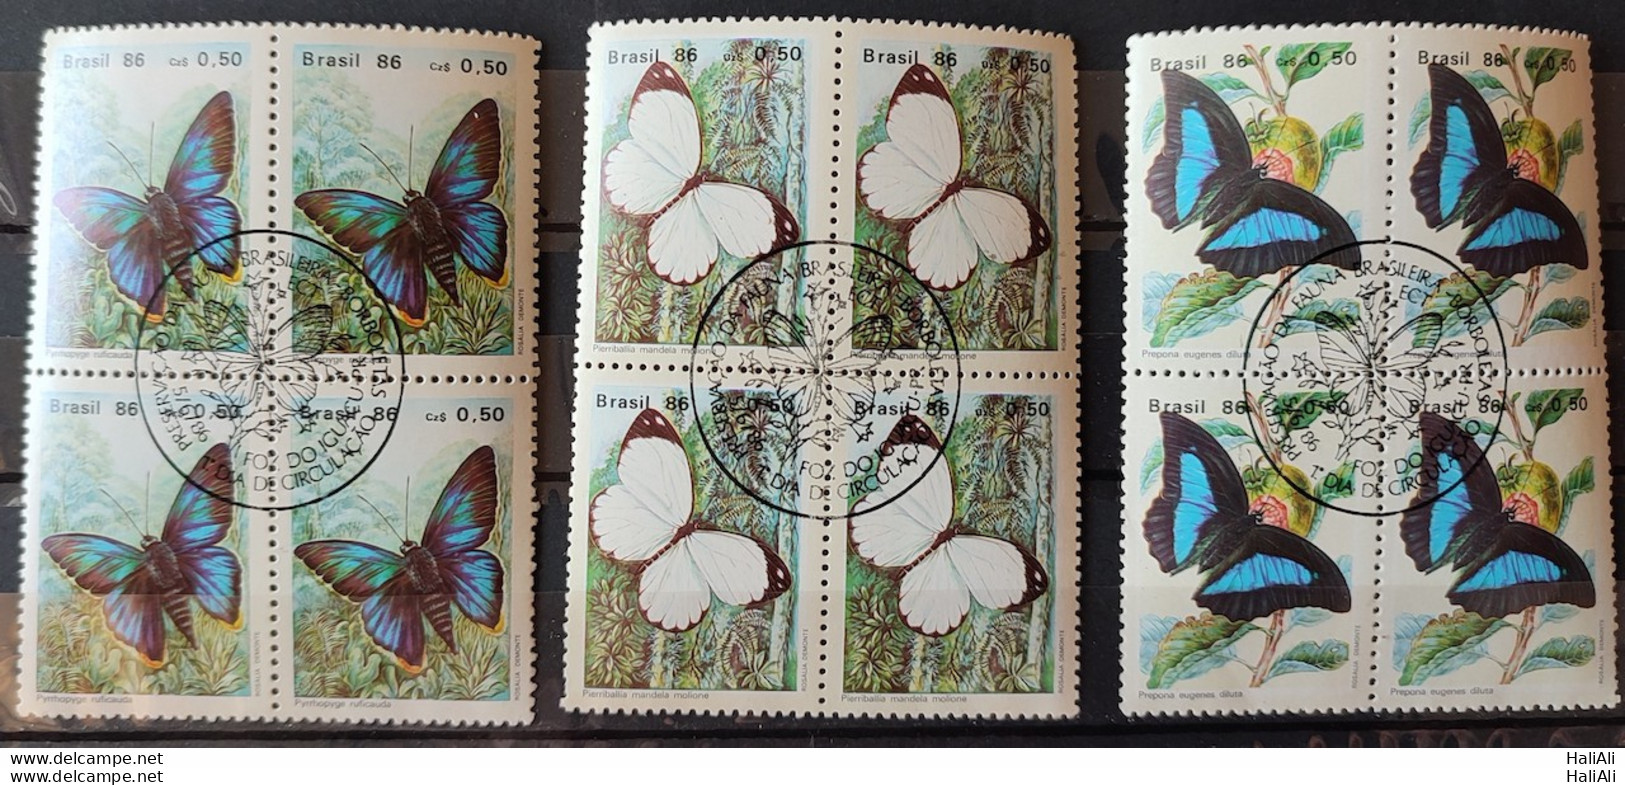 C 1512 Brazil Stamp Butterfly Insects 1986 Block Of 4 CBC PR Complete Series 2.jpg - Ongebruikt